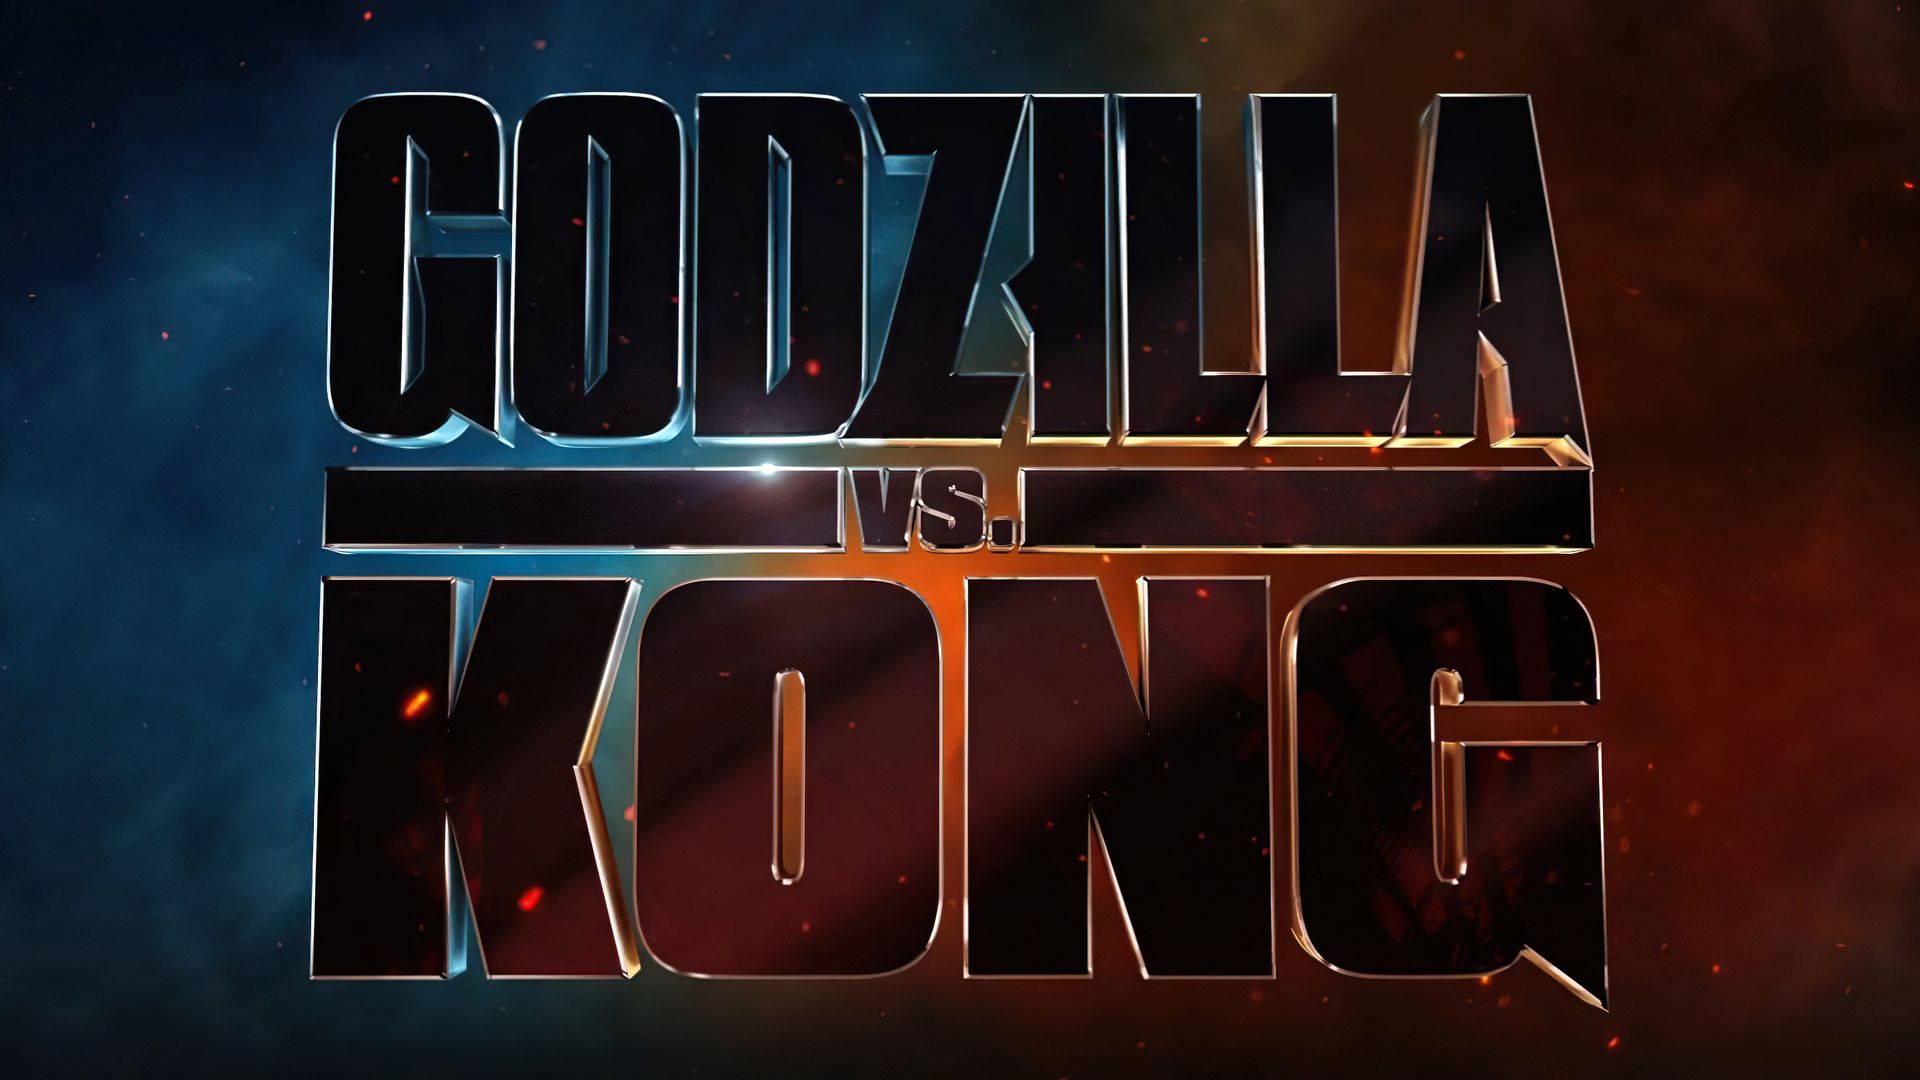 Godzilla Vs Kong 2021 Laptop Full HD 1080P HD 4k Wallpaper, Image, Background, Photo and Picture